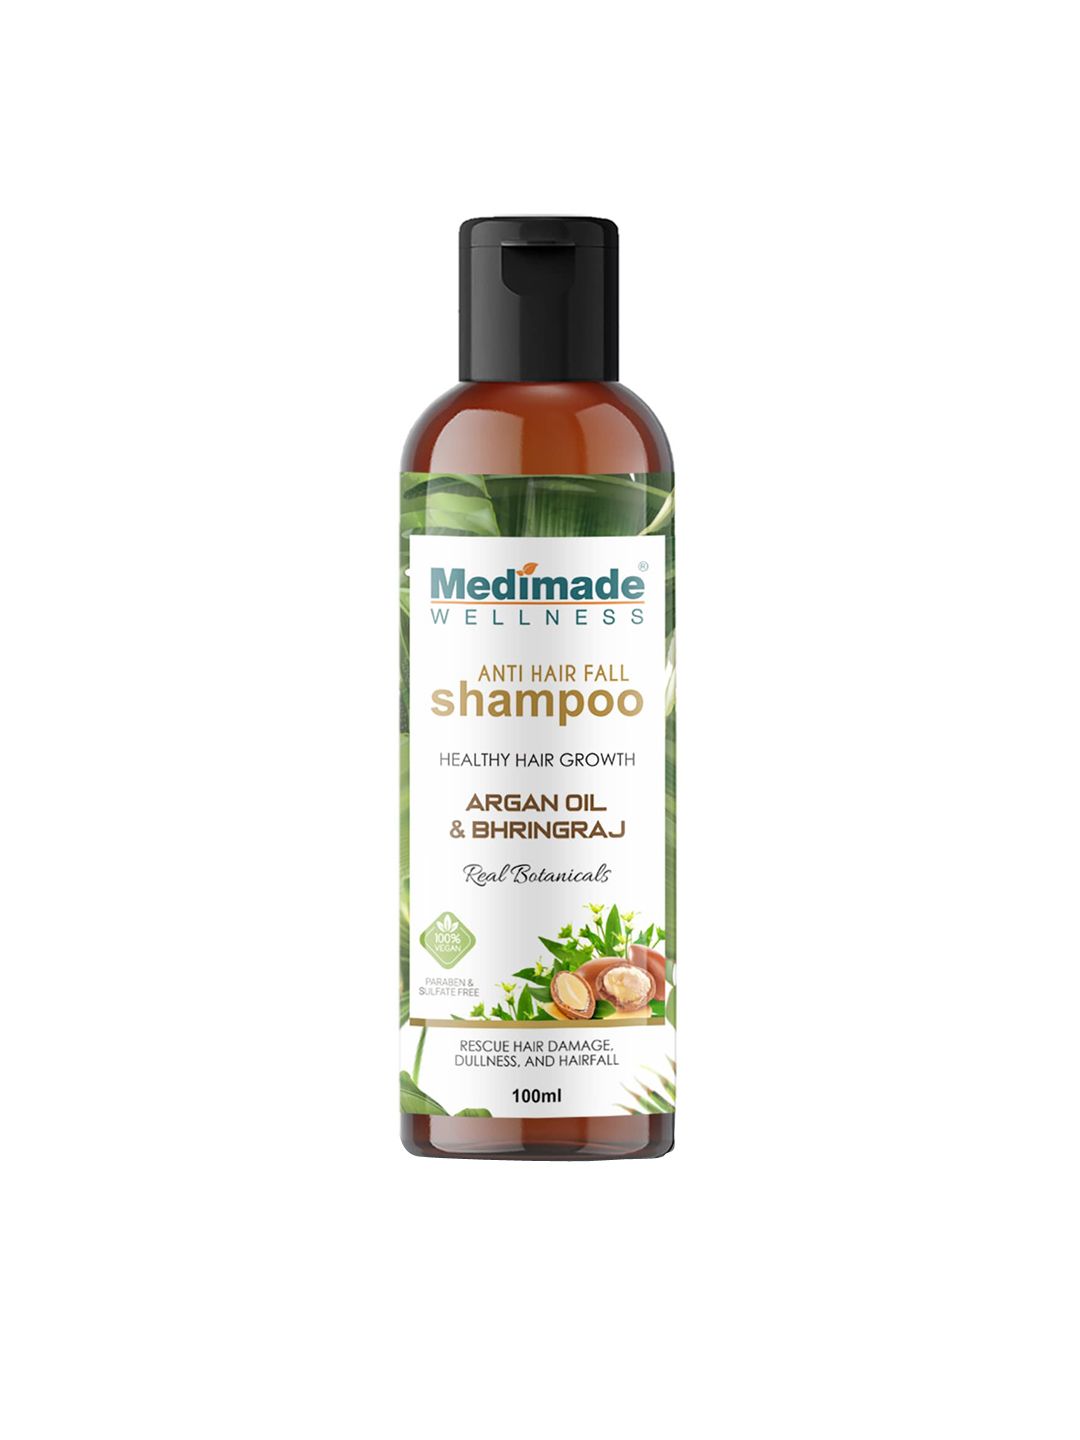 Medimade Anti Hair Fall Shampoo with Argan Oil & Bhringraj 100 ml Price in India